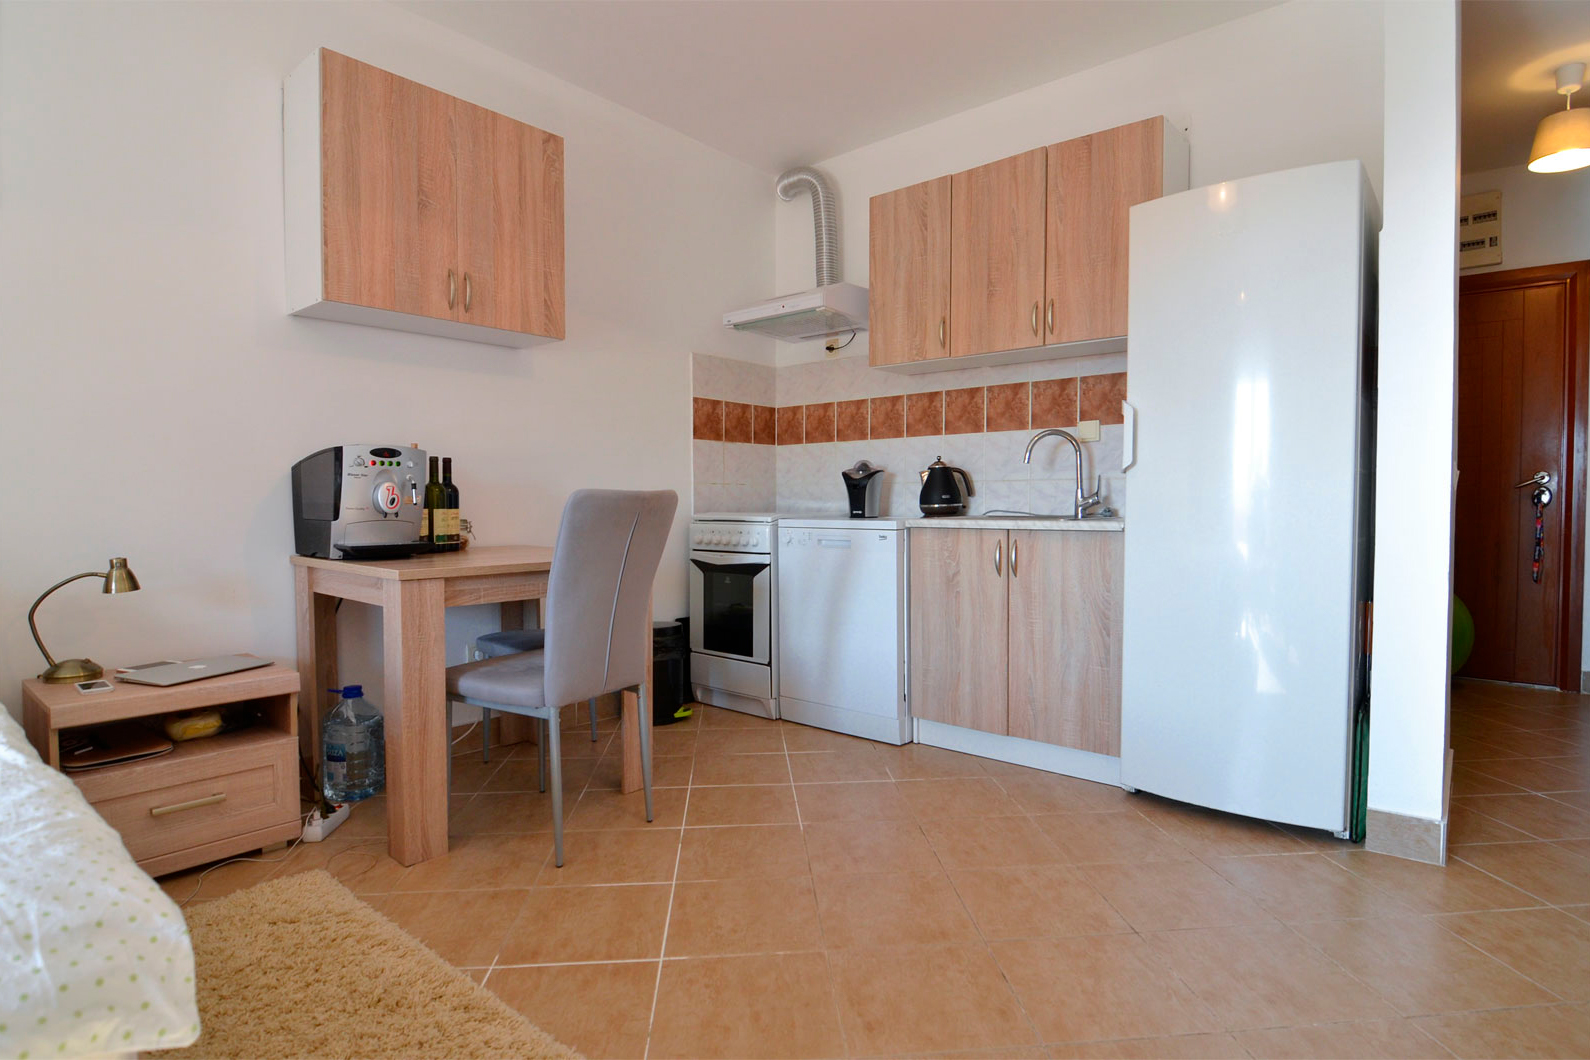 kitchen area in a studio apartment